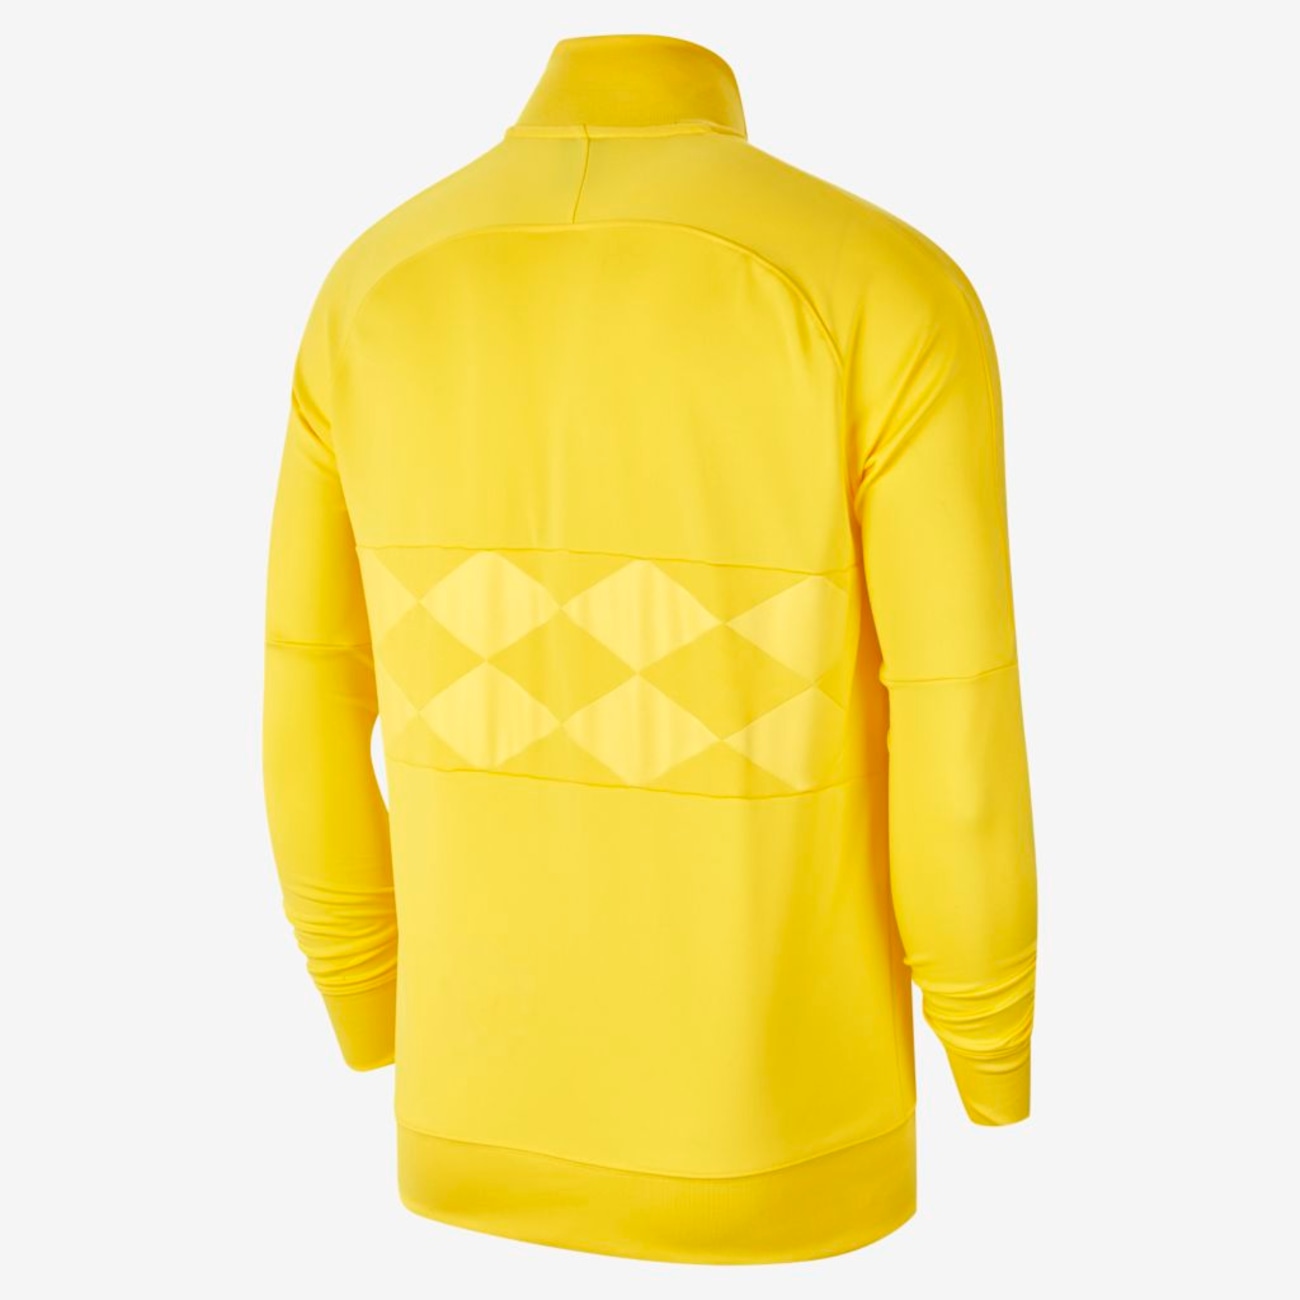 Jaqueta Brasil Nike Masculina - Amarelo